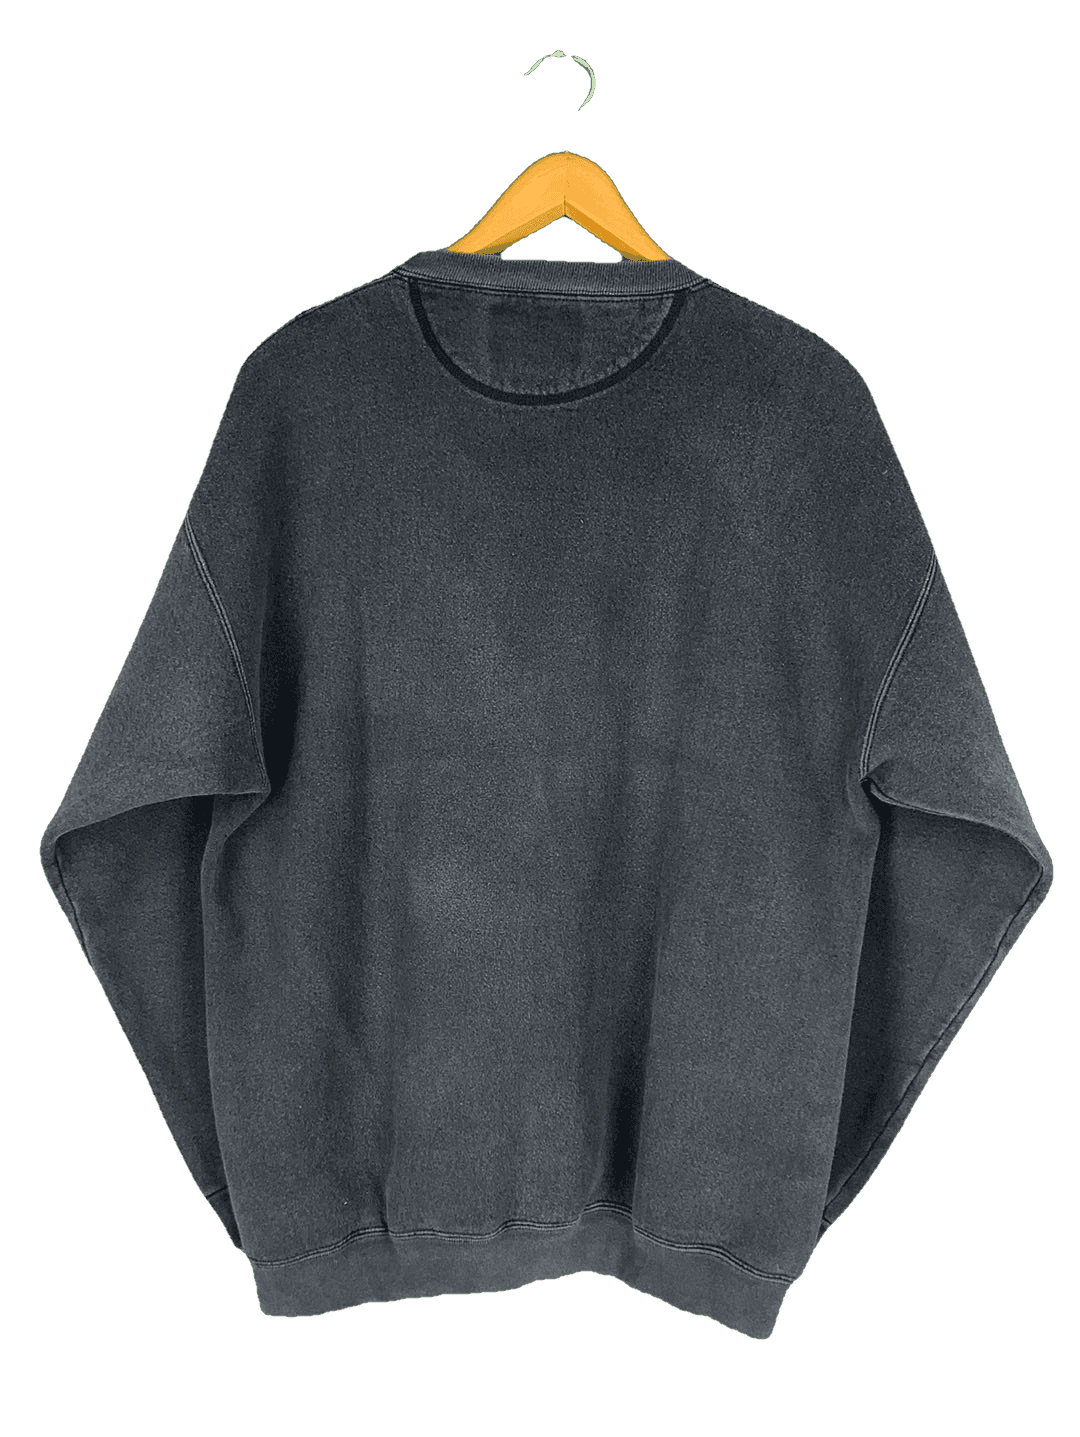 Hard Rock Cafe “Miami” Sweater (L)